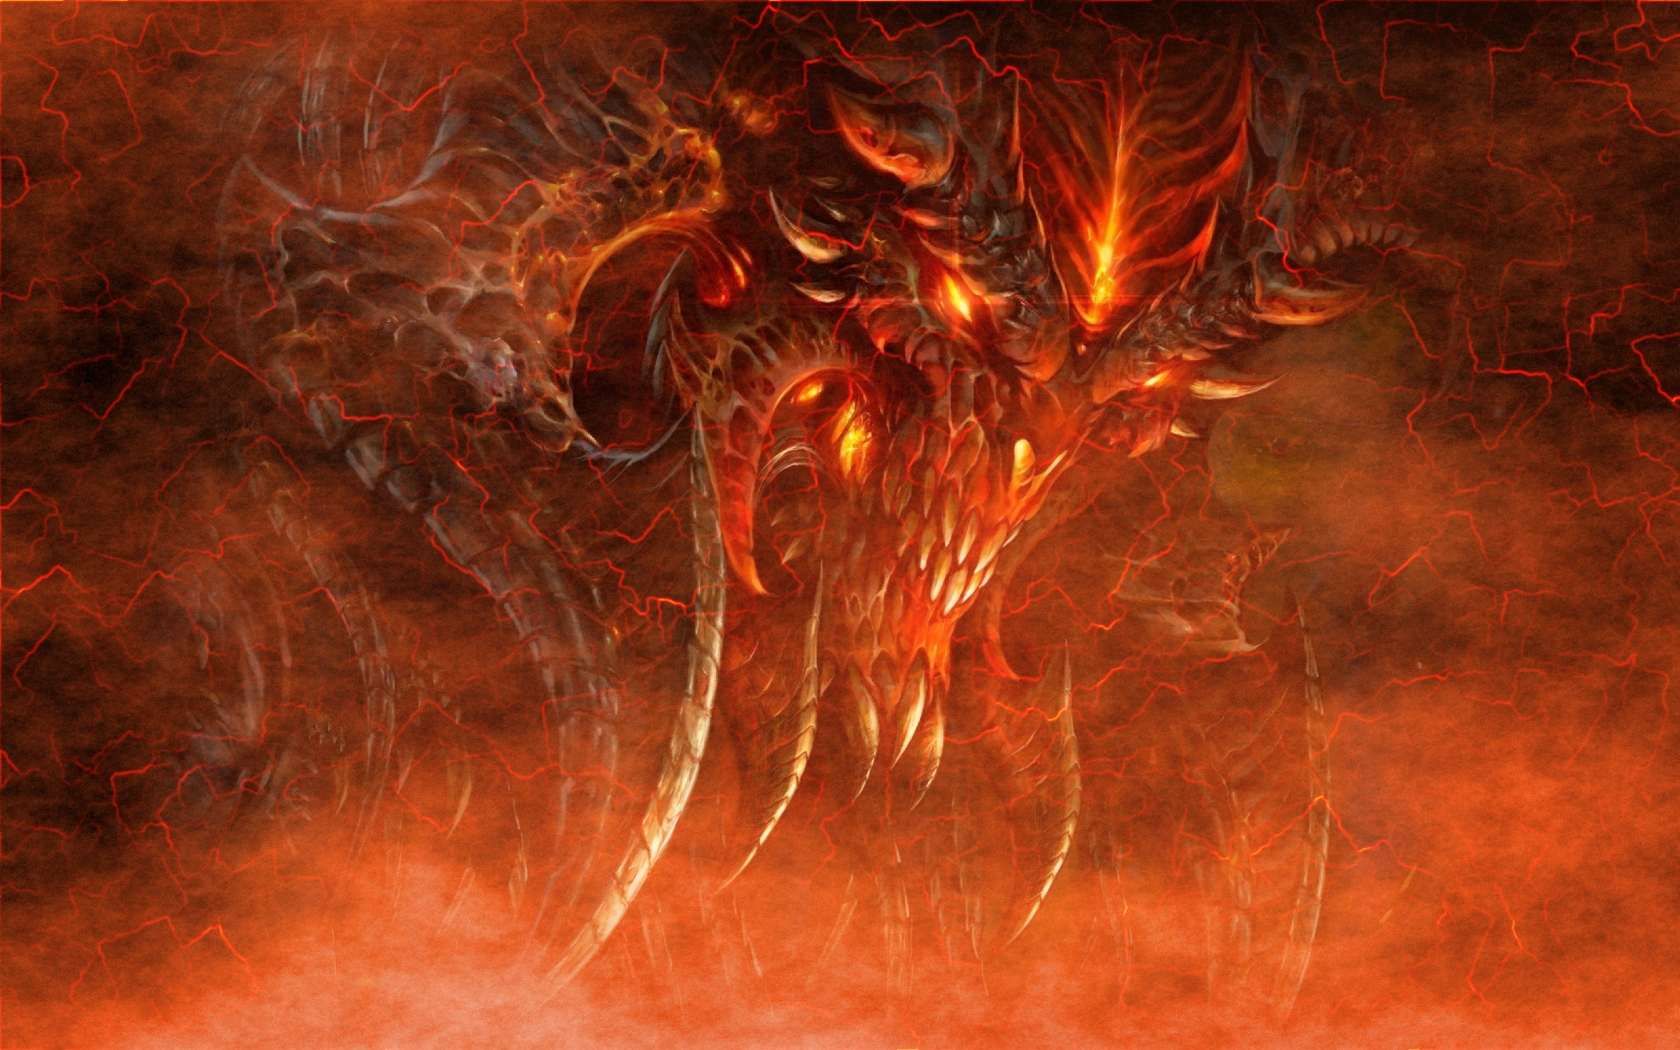 Demon from Diablo III video game, a captivating desktop wallpaper by Diabolo665.